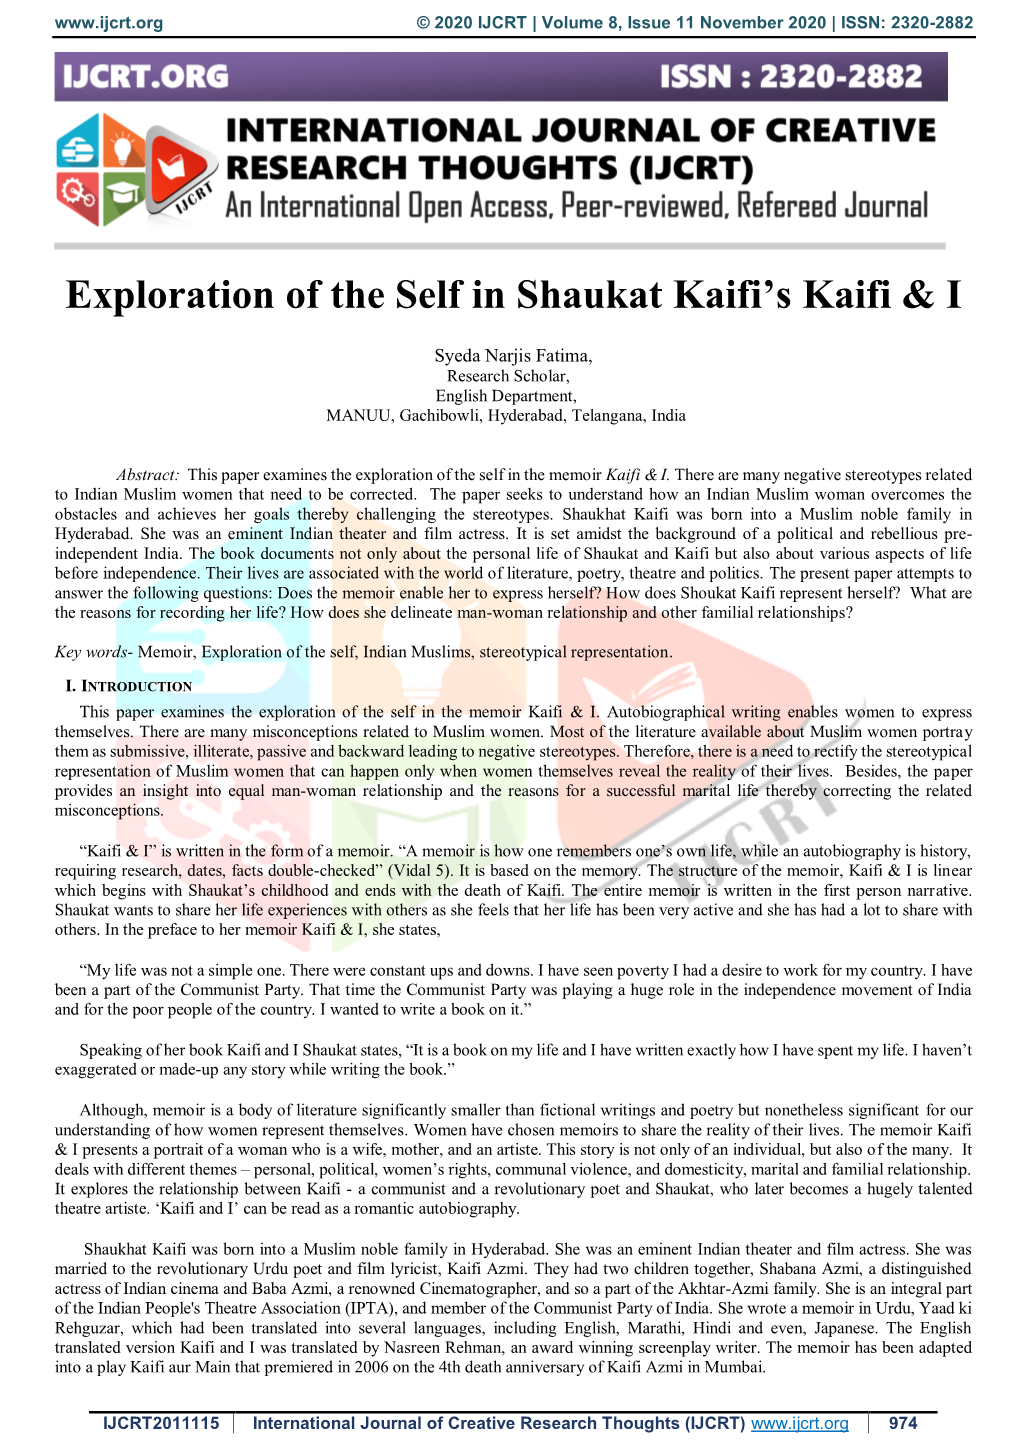 Exploration of the Self in Shaukat Kaifi's Kaifi & I